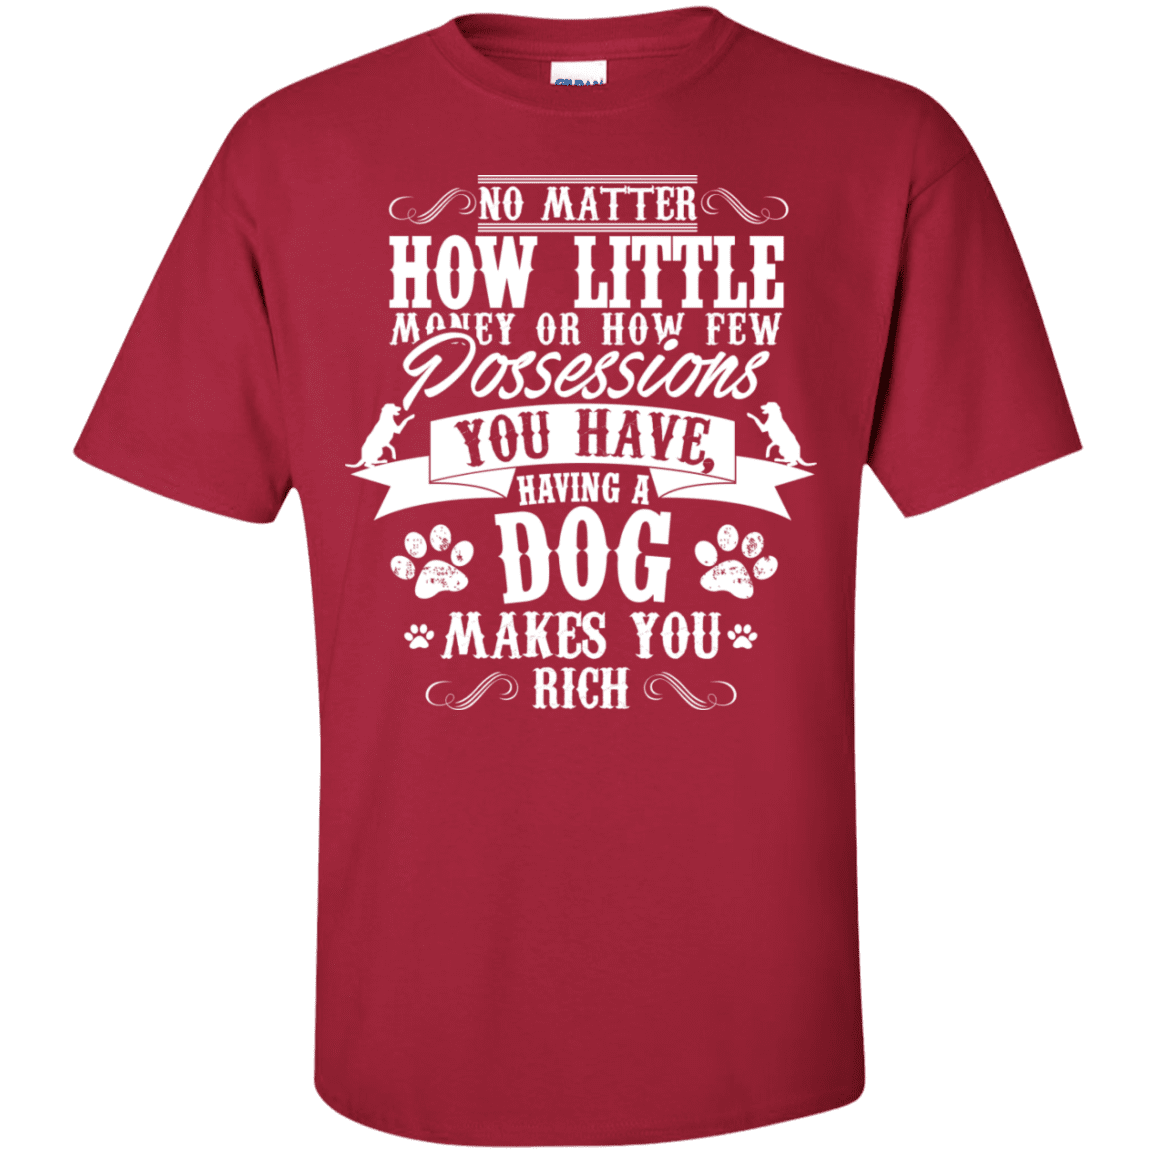 Dogs Make You Rich - T Shirt.